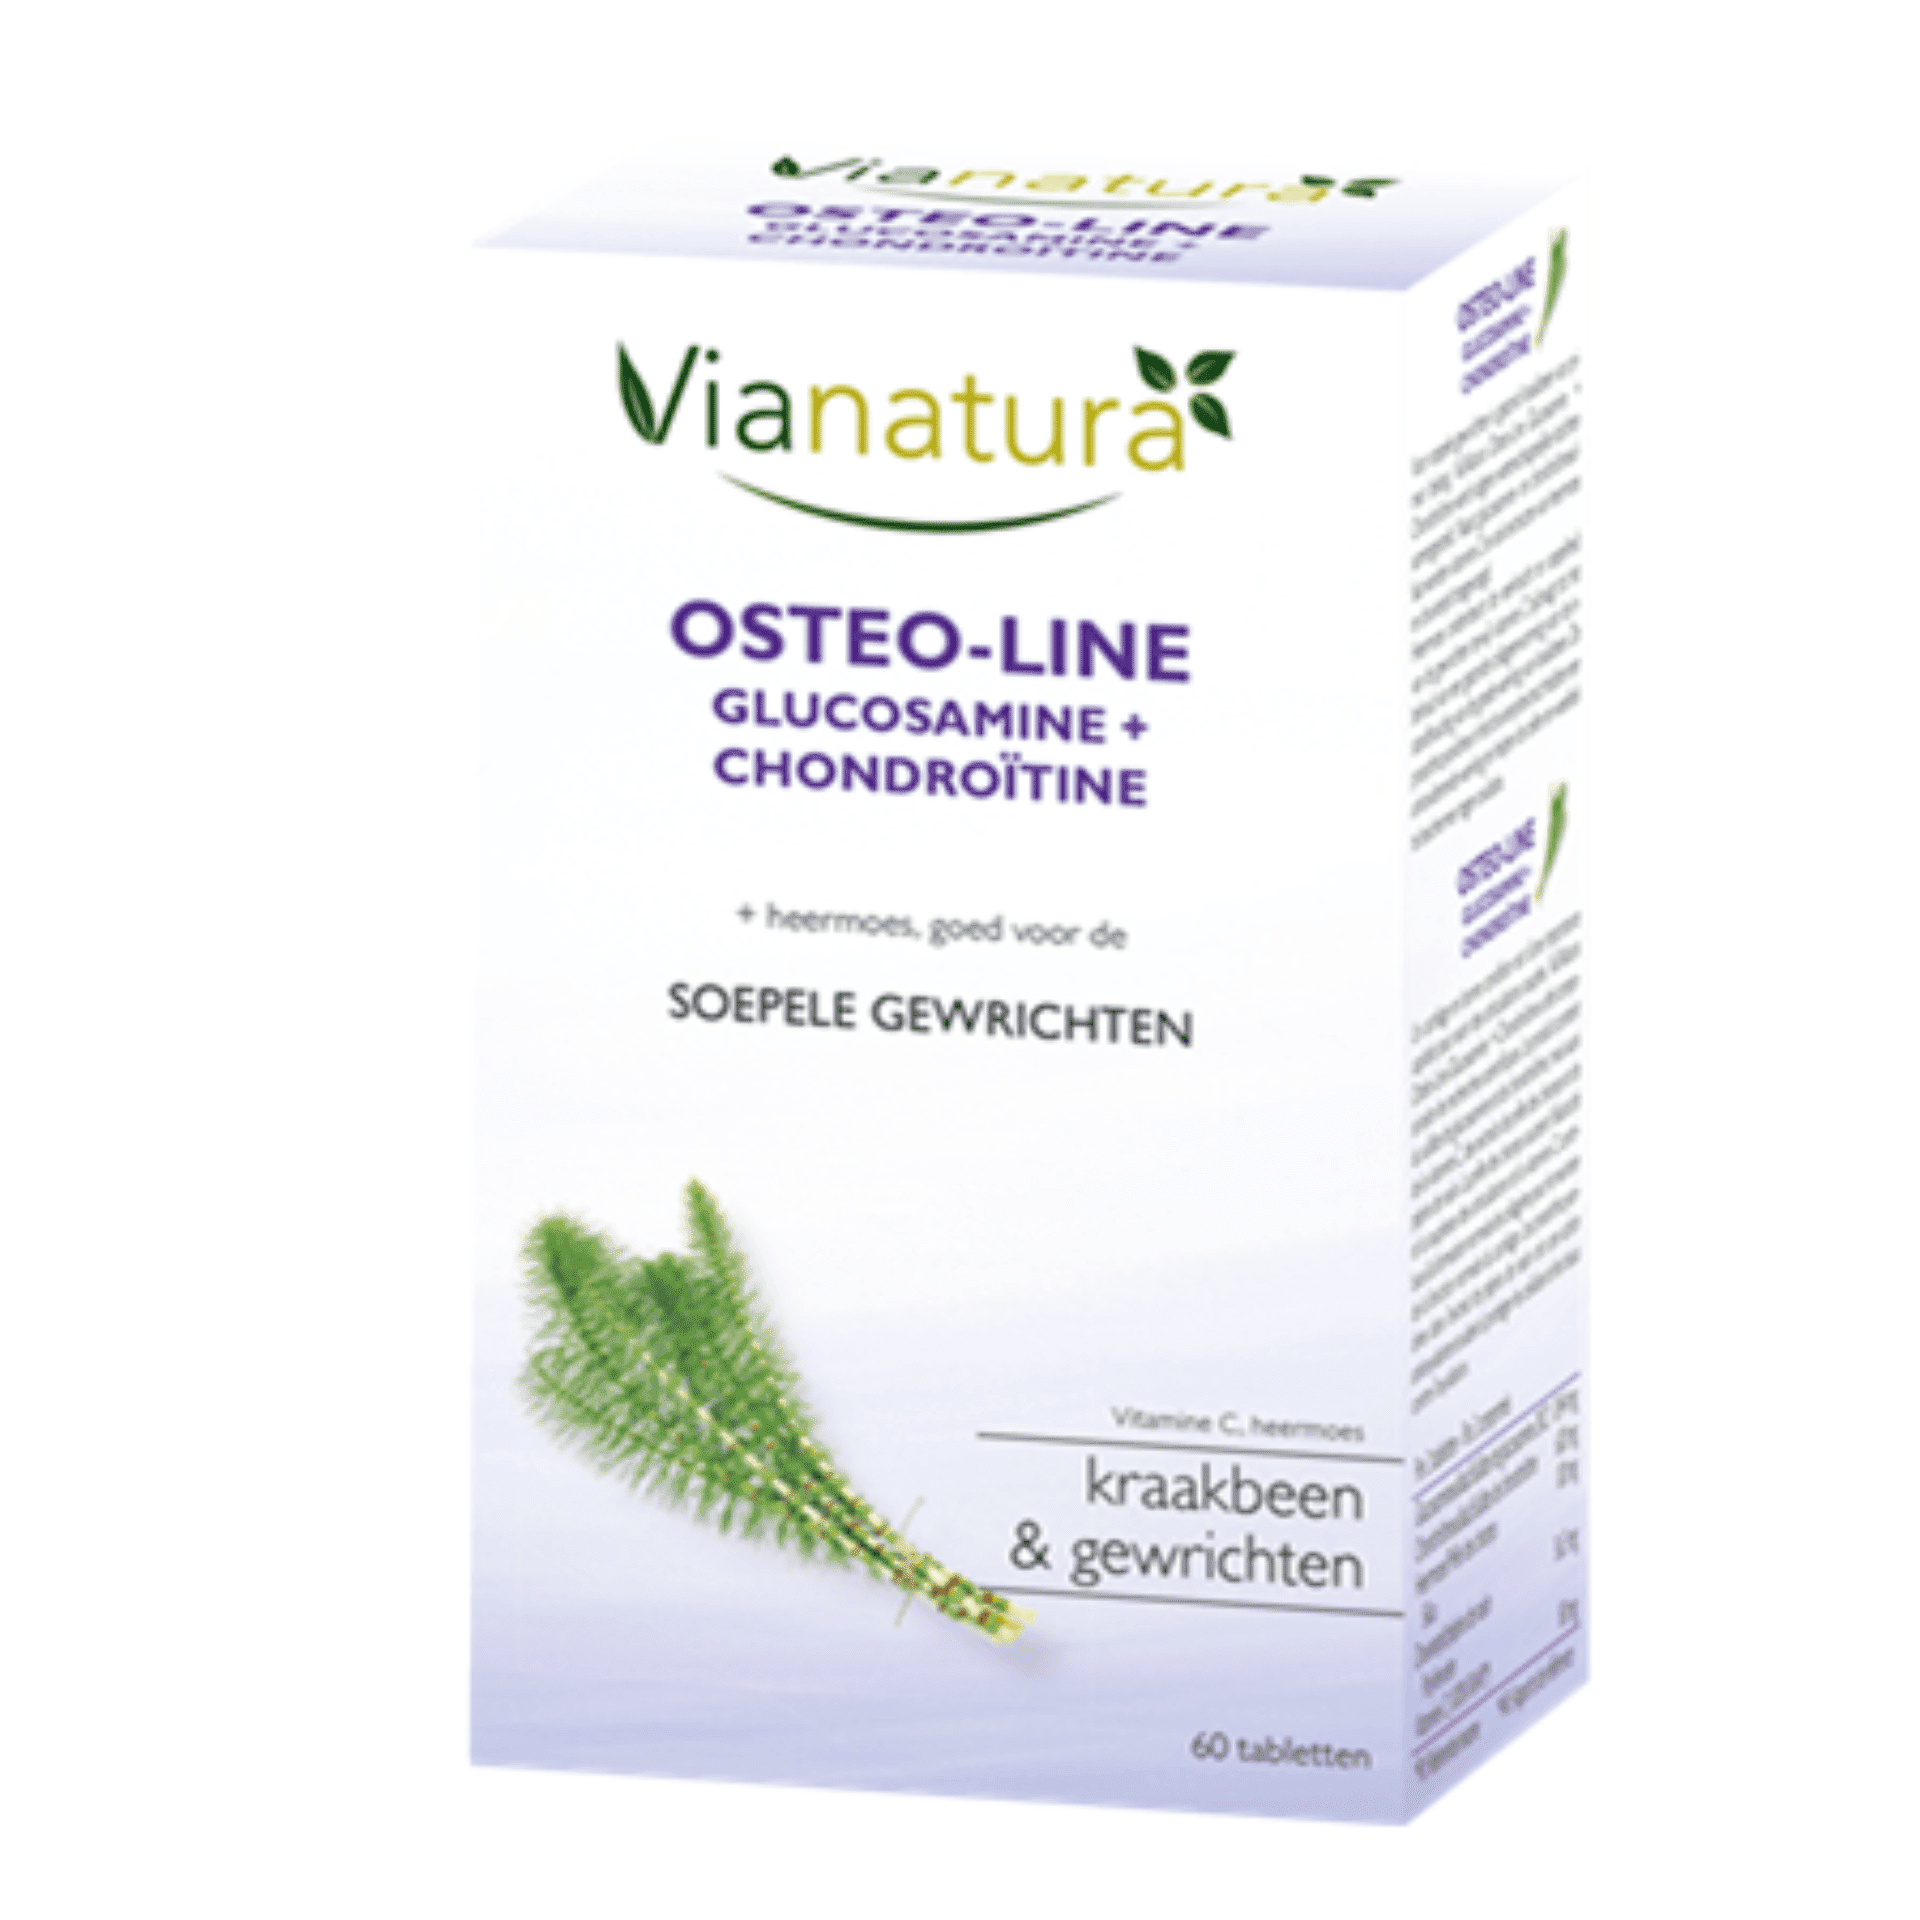 Vianatura Osteo-Line Glucosamine + Chondroïtine 60 tabletten